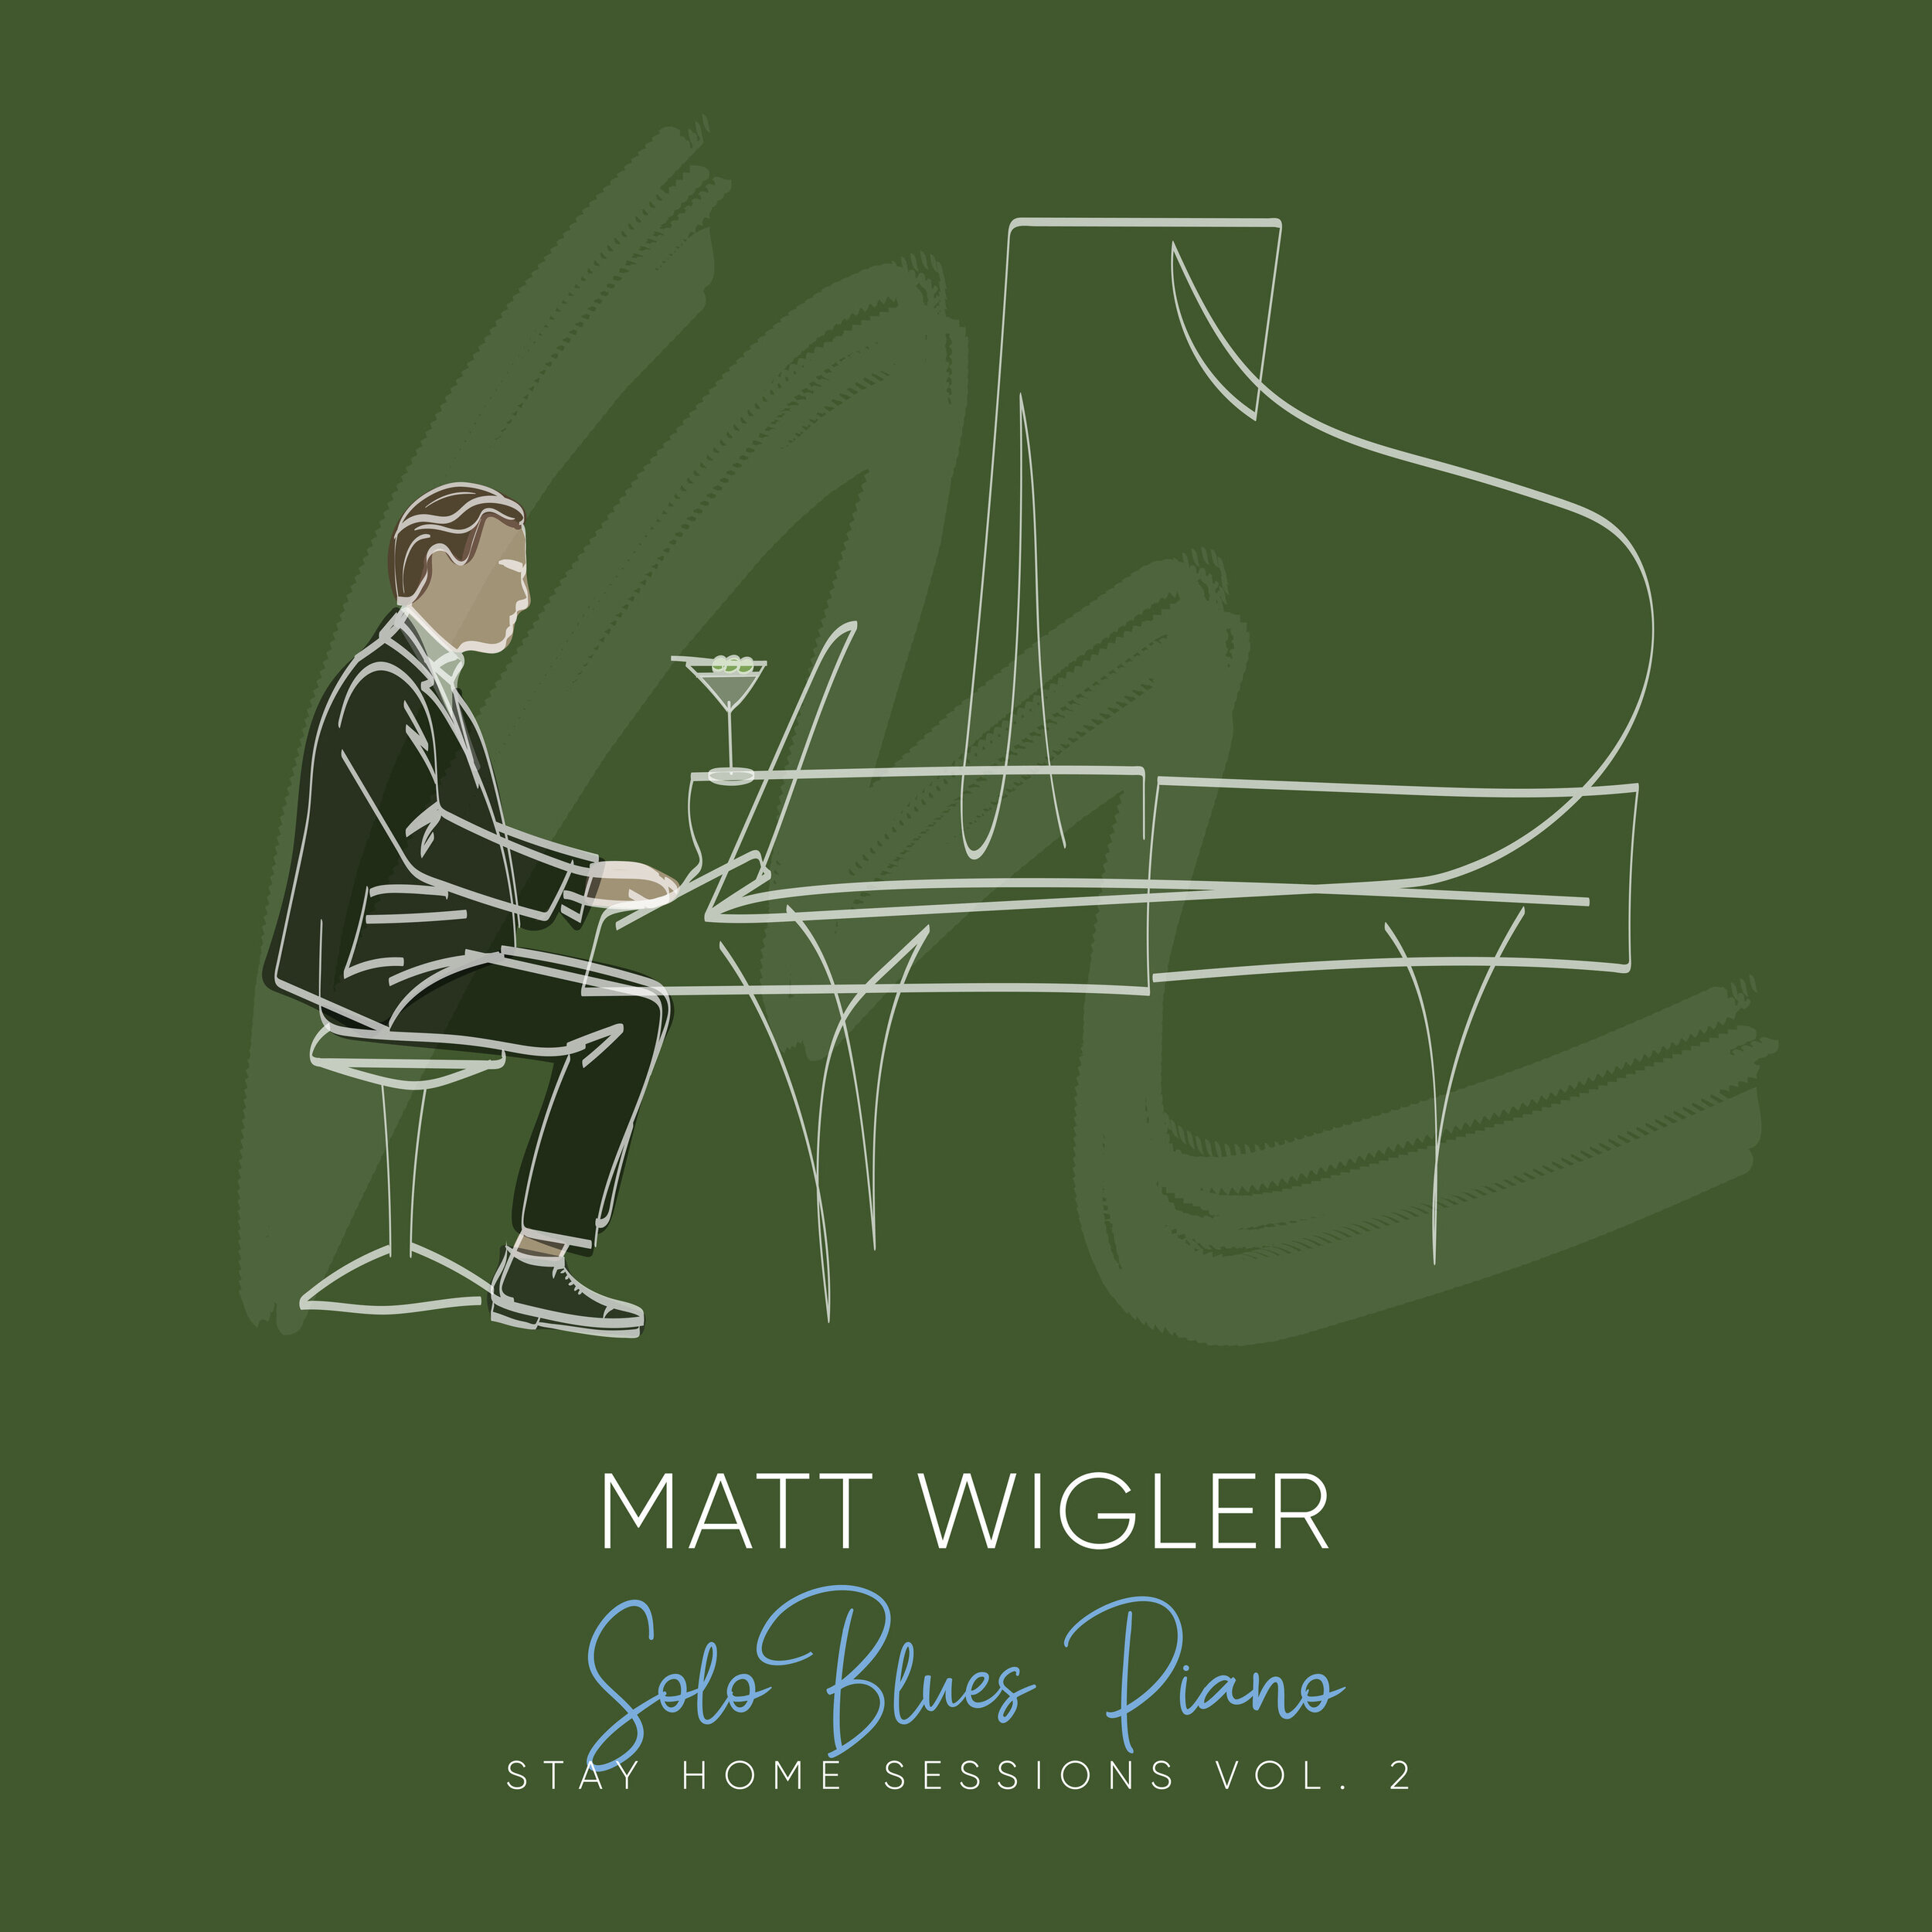 Solo Blues Piano (Stay Home Sessions Vol. 2) (Copy)